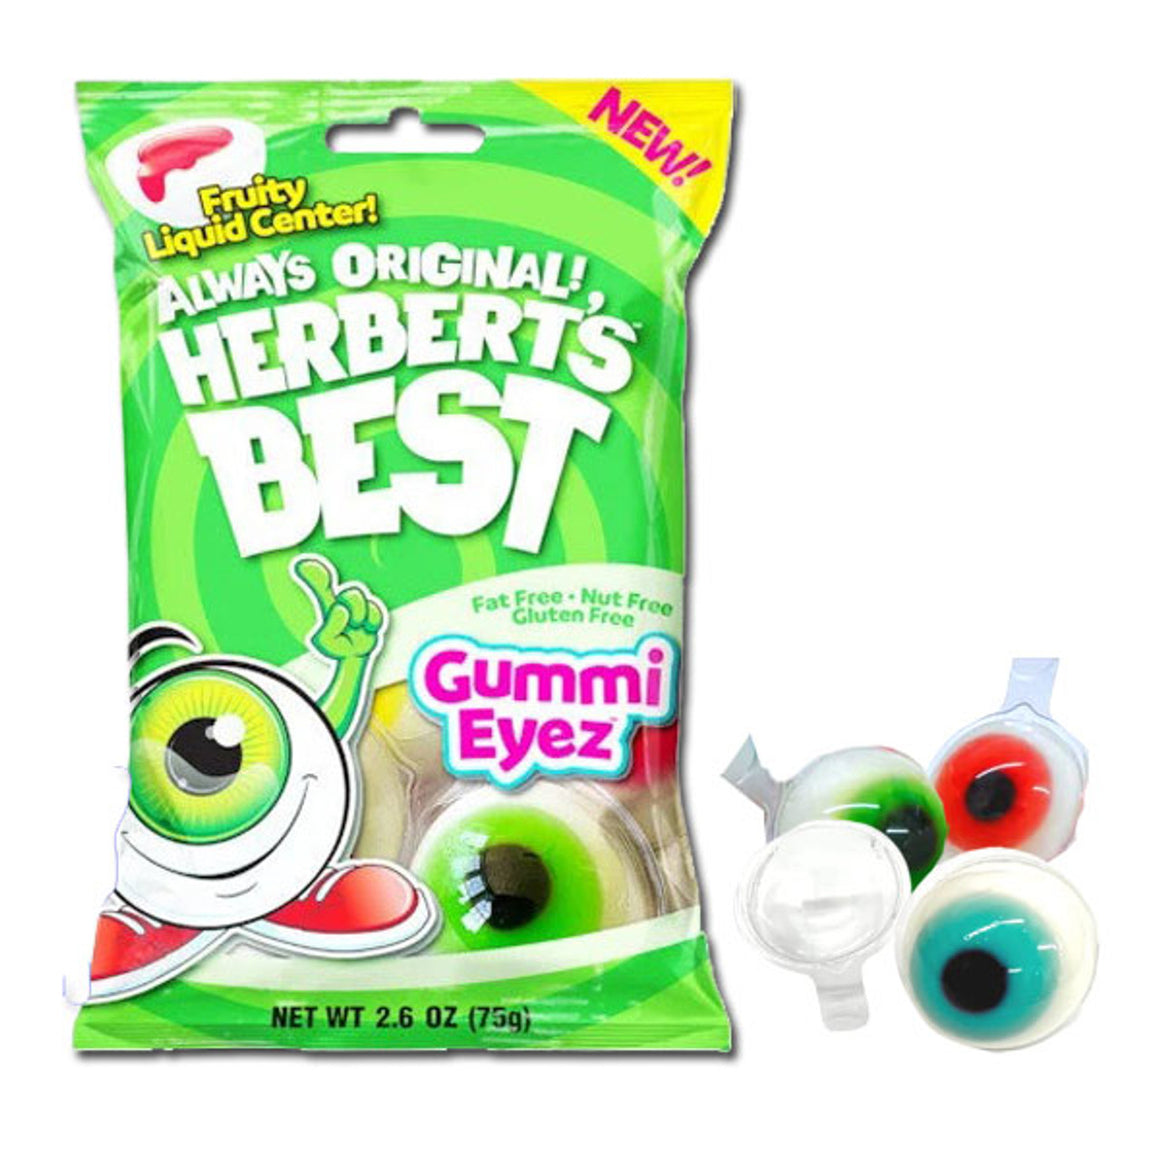 All City Candy Herbert's Best Gummi Eyez 2.6 oz. Bag Gummi efrutti For fresh candy and great service, visit www.allcitycandy.com